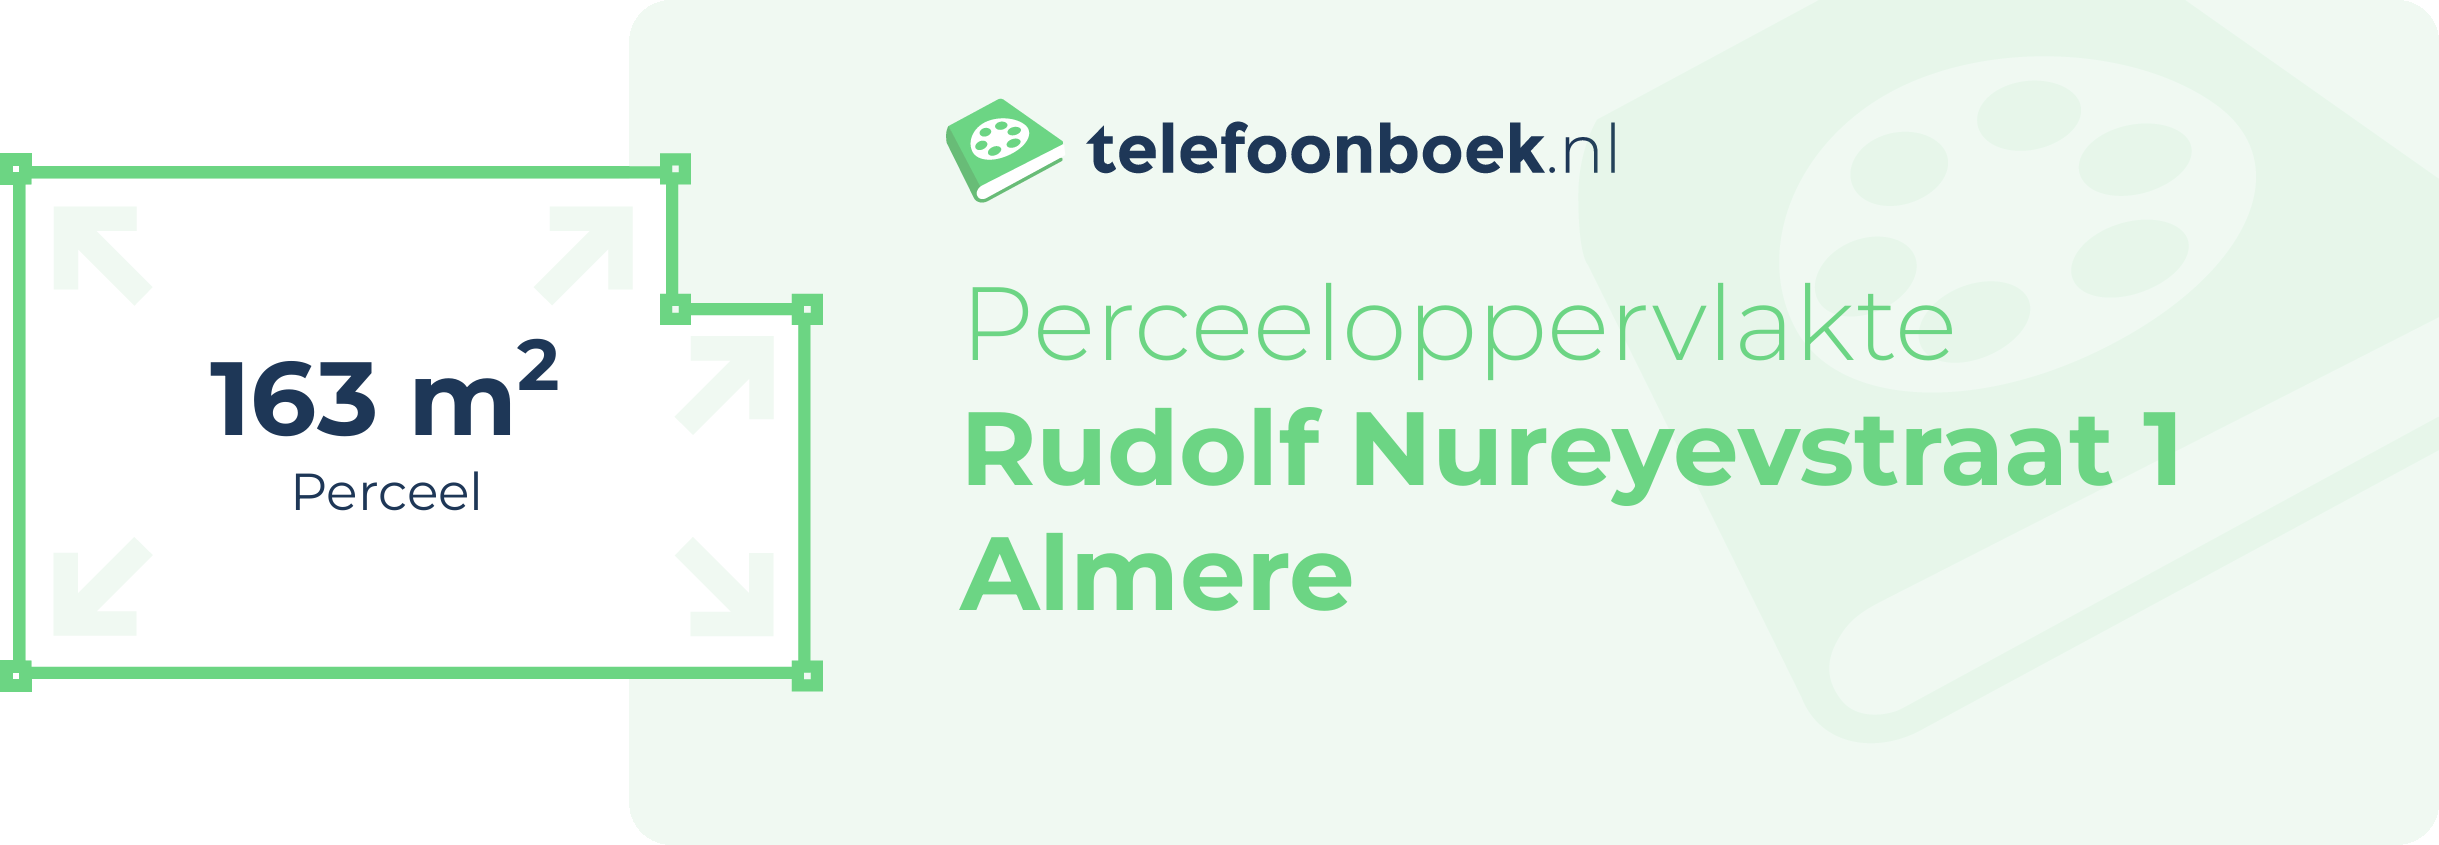 Perceeloppervlakte Rudolf Nureyevstraat 1 Almere